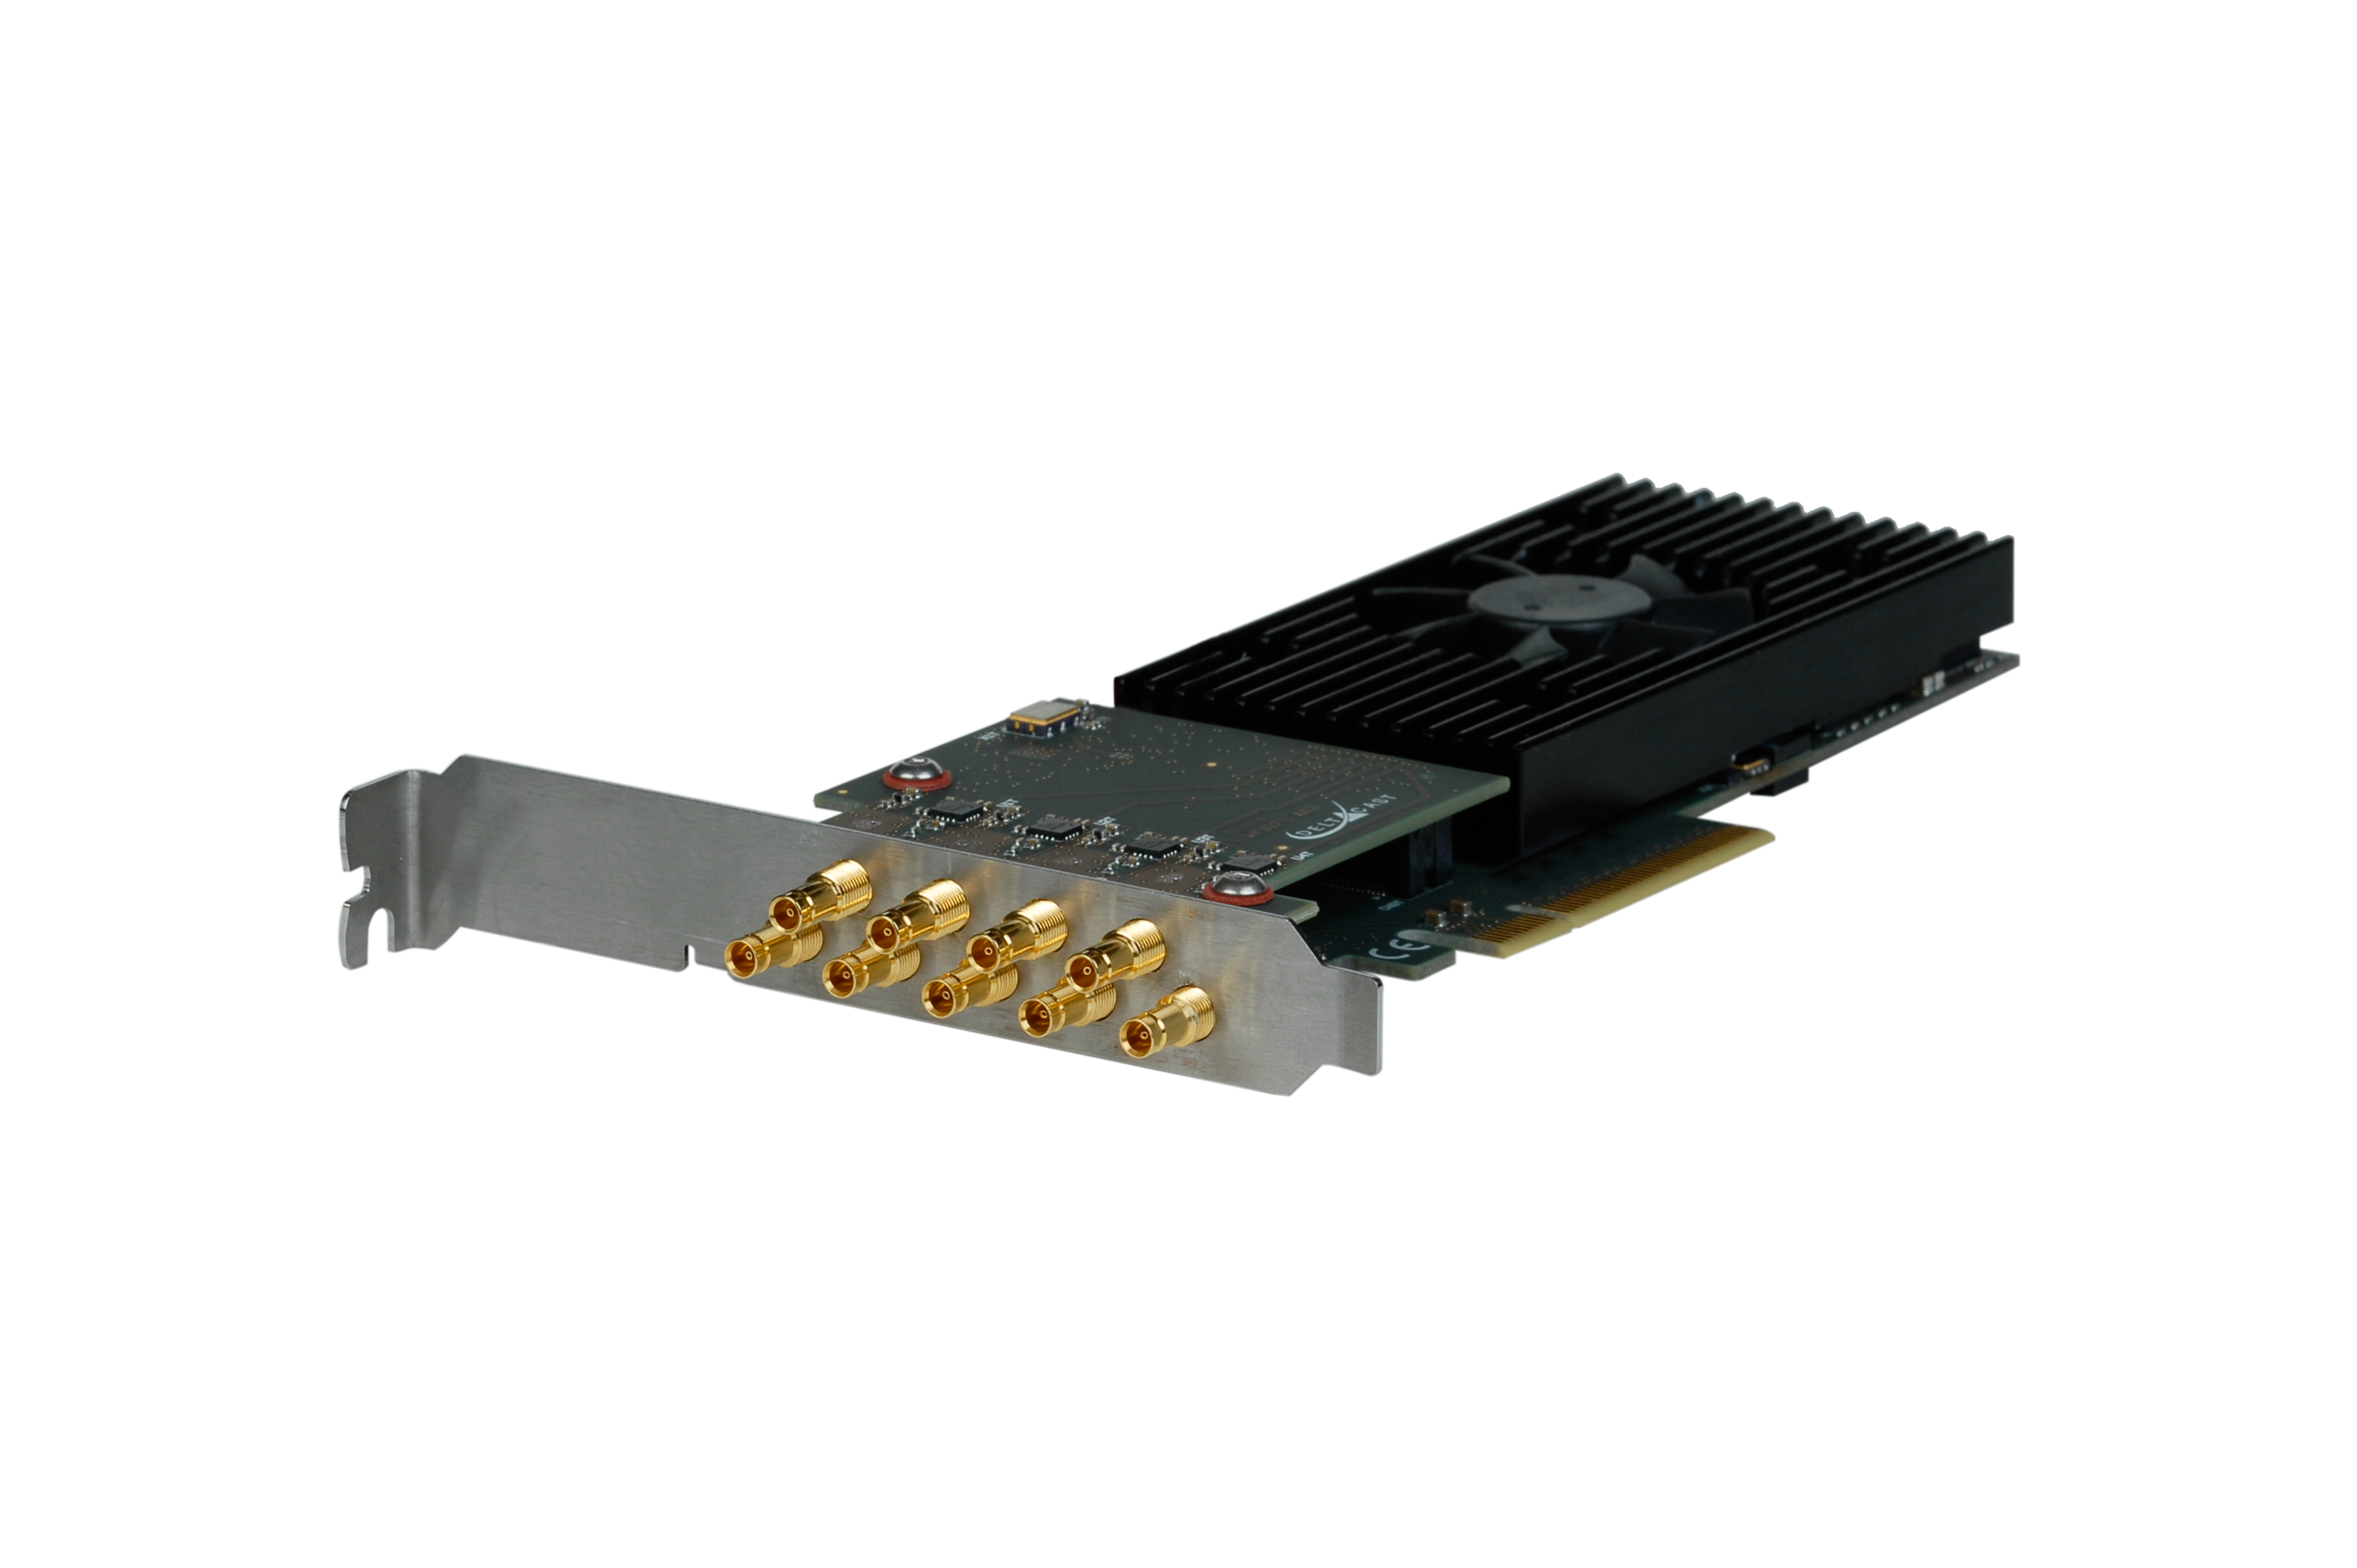 Deltacast Delta-hd-elp-d 80 HD-SDI Capture Card PCIe 2.0 8 Channel 